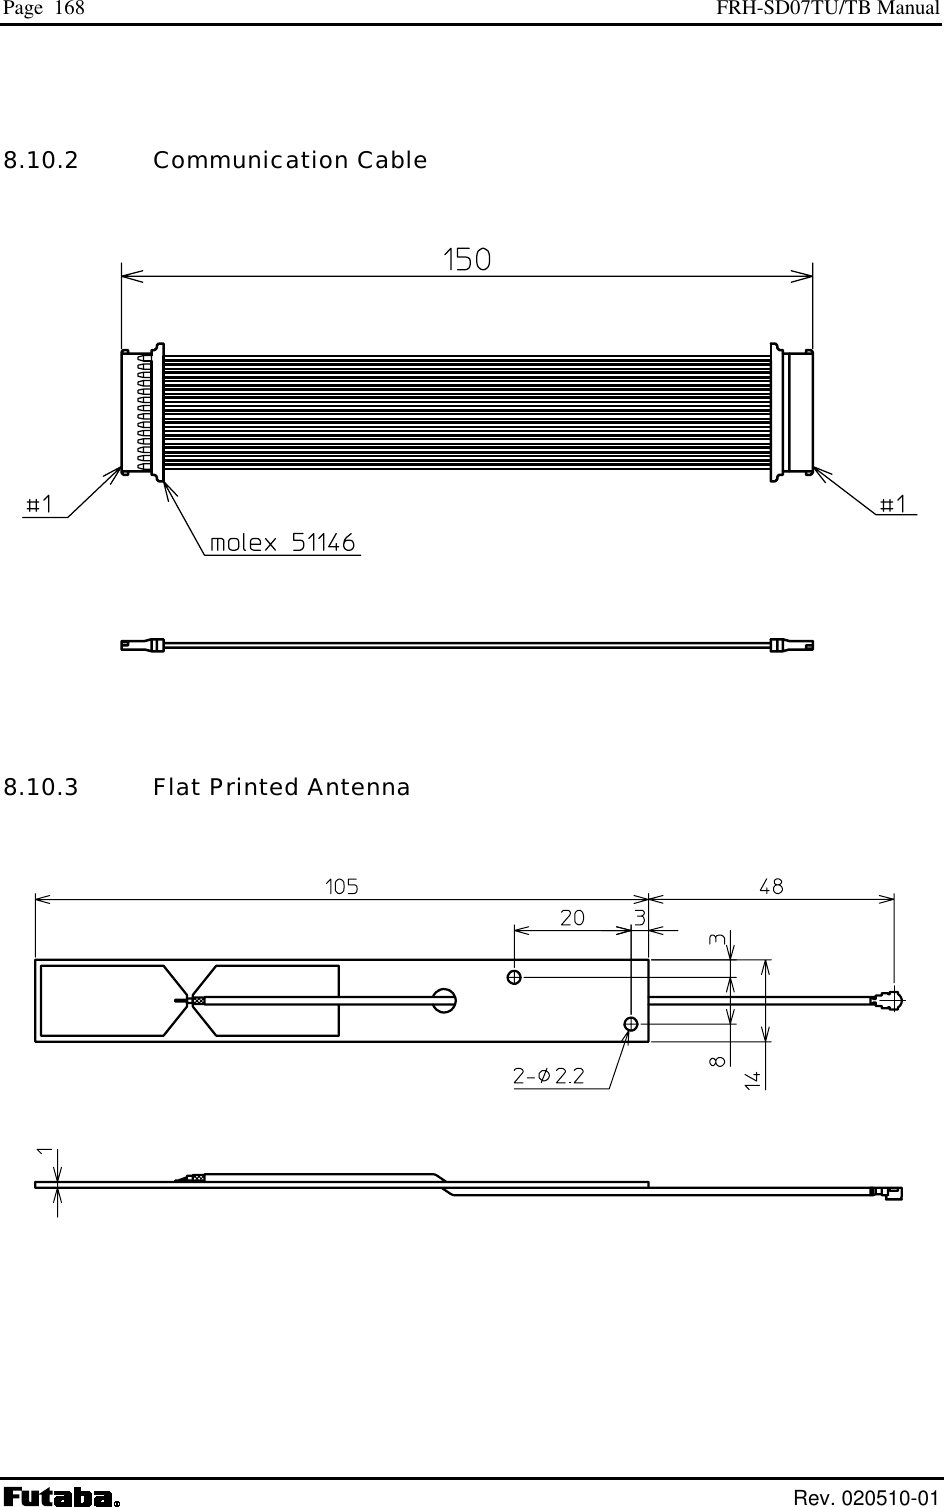 Page  168  FRH-SD07TU/TB Manual  Rev. 020510-01  8.10.2   Communication Cable     8.10.3   Flat Printed Antenna       